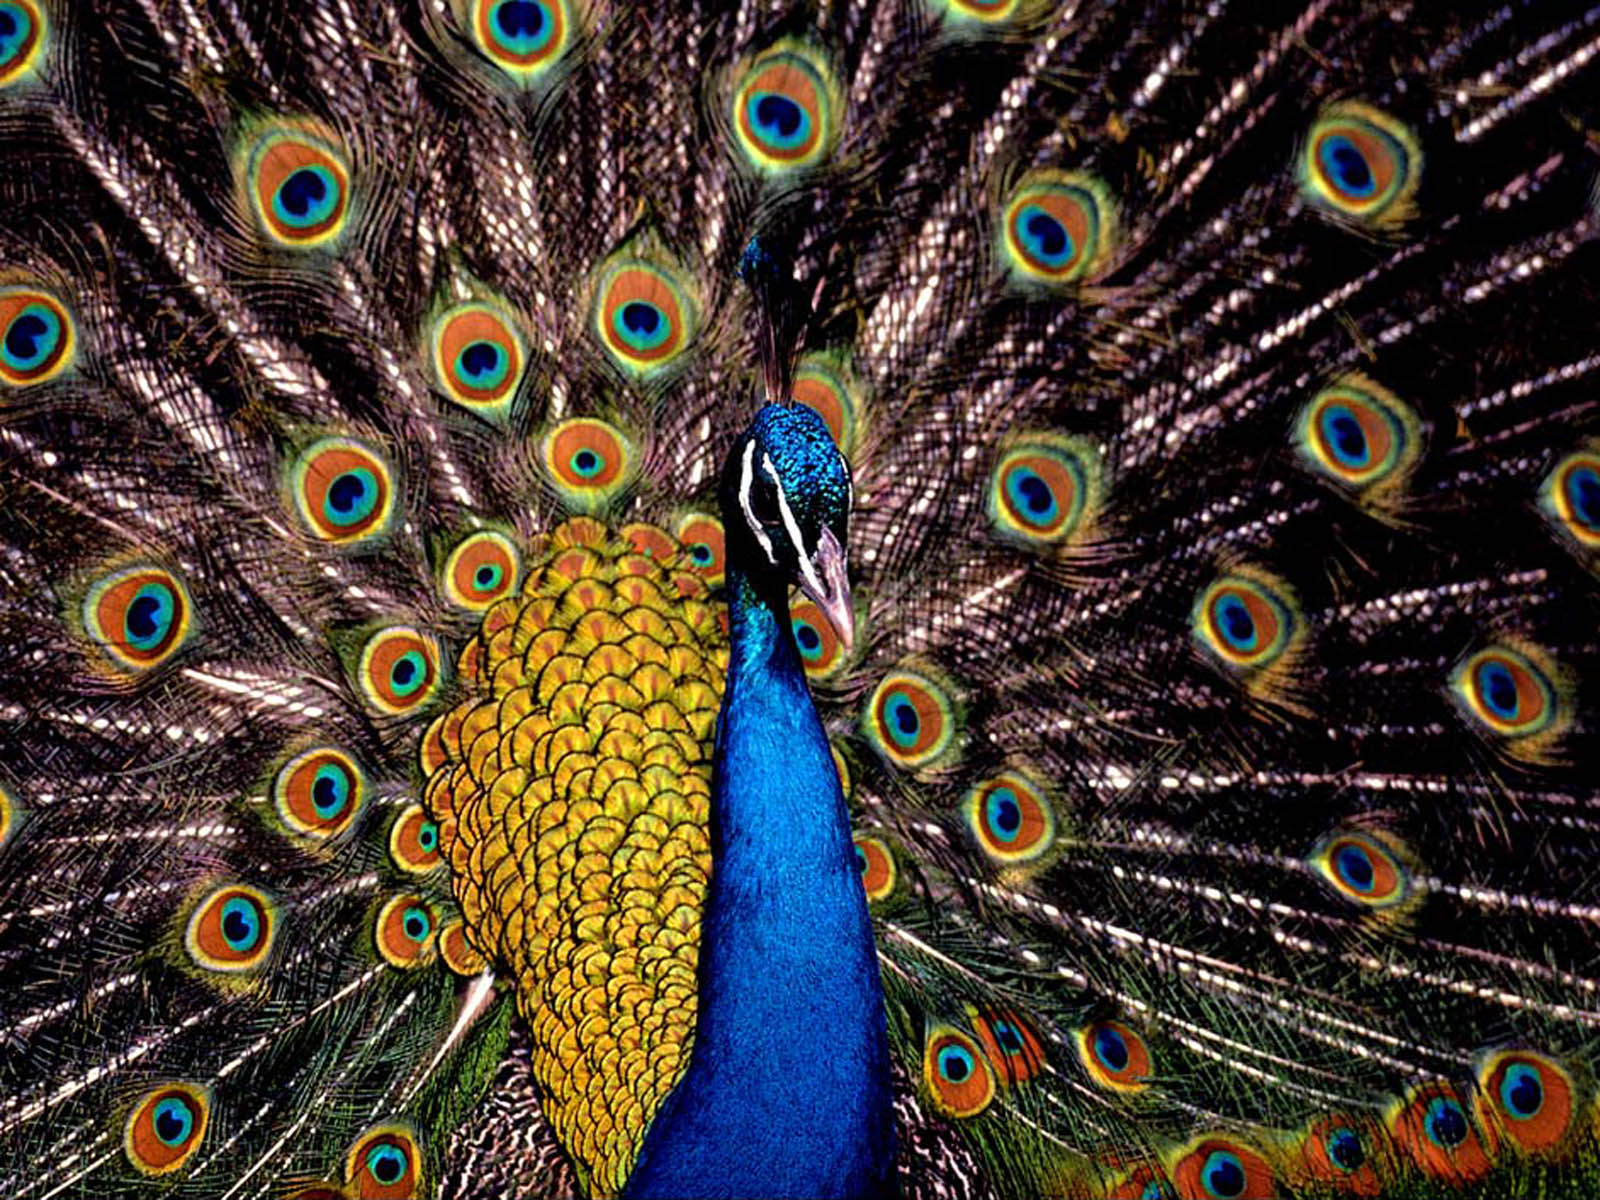 Keywords: Peacock Wallpapers, Peacock DesktopWallpapers, Peacock ...